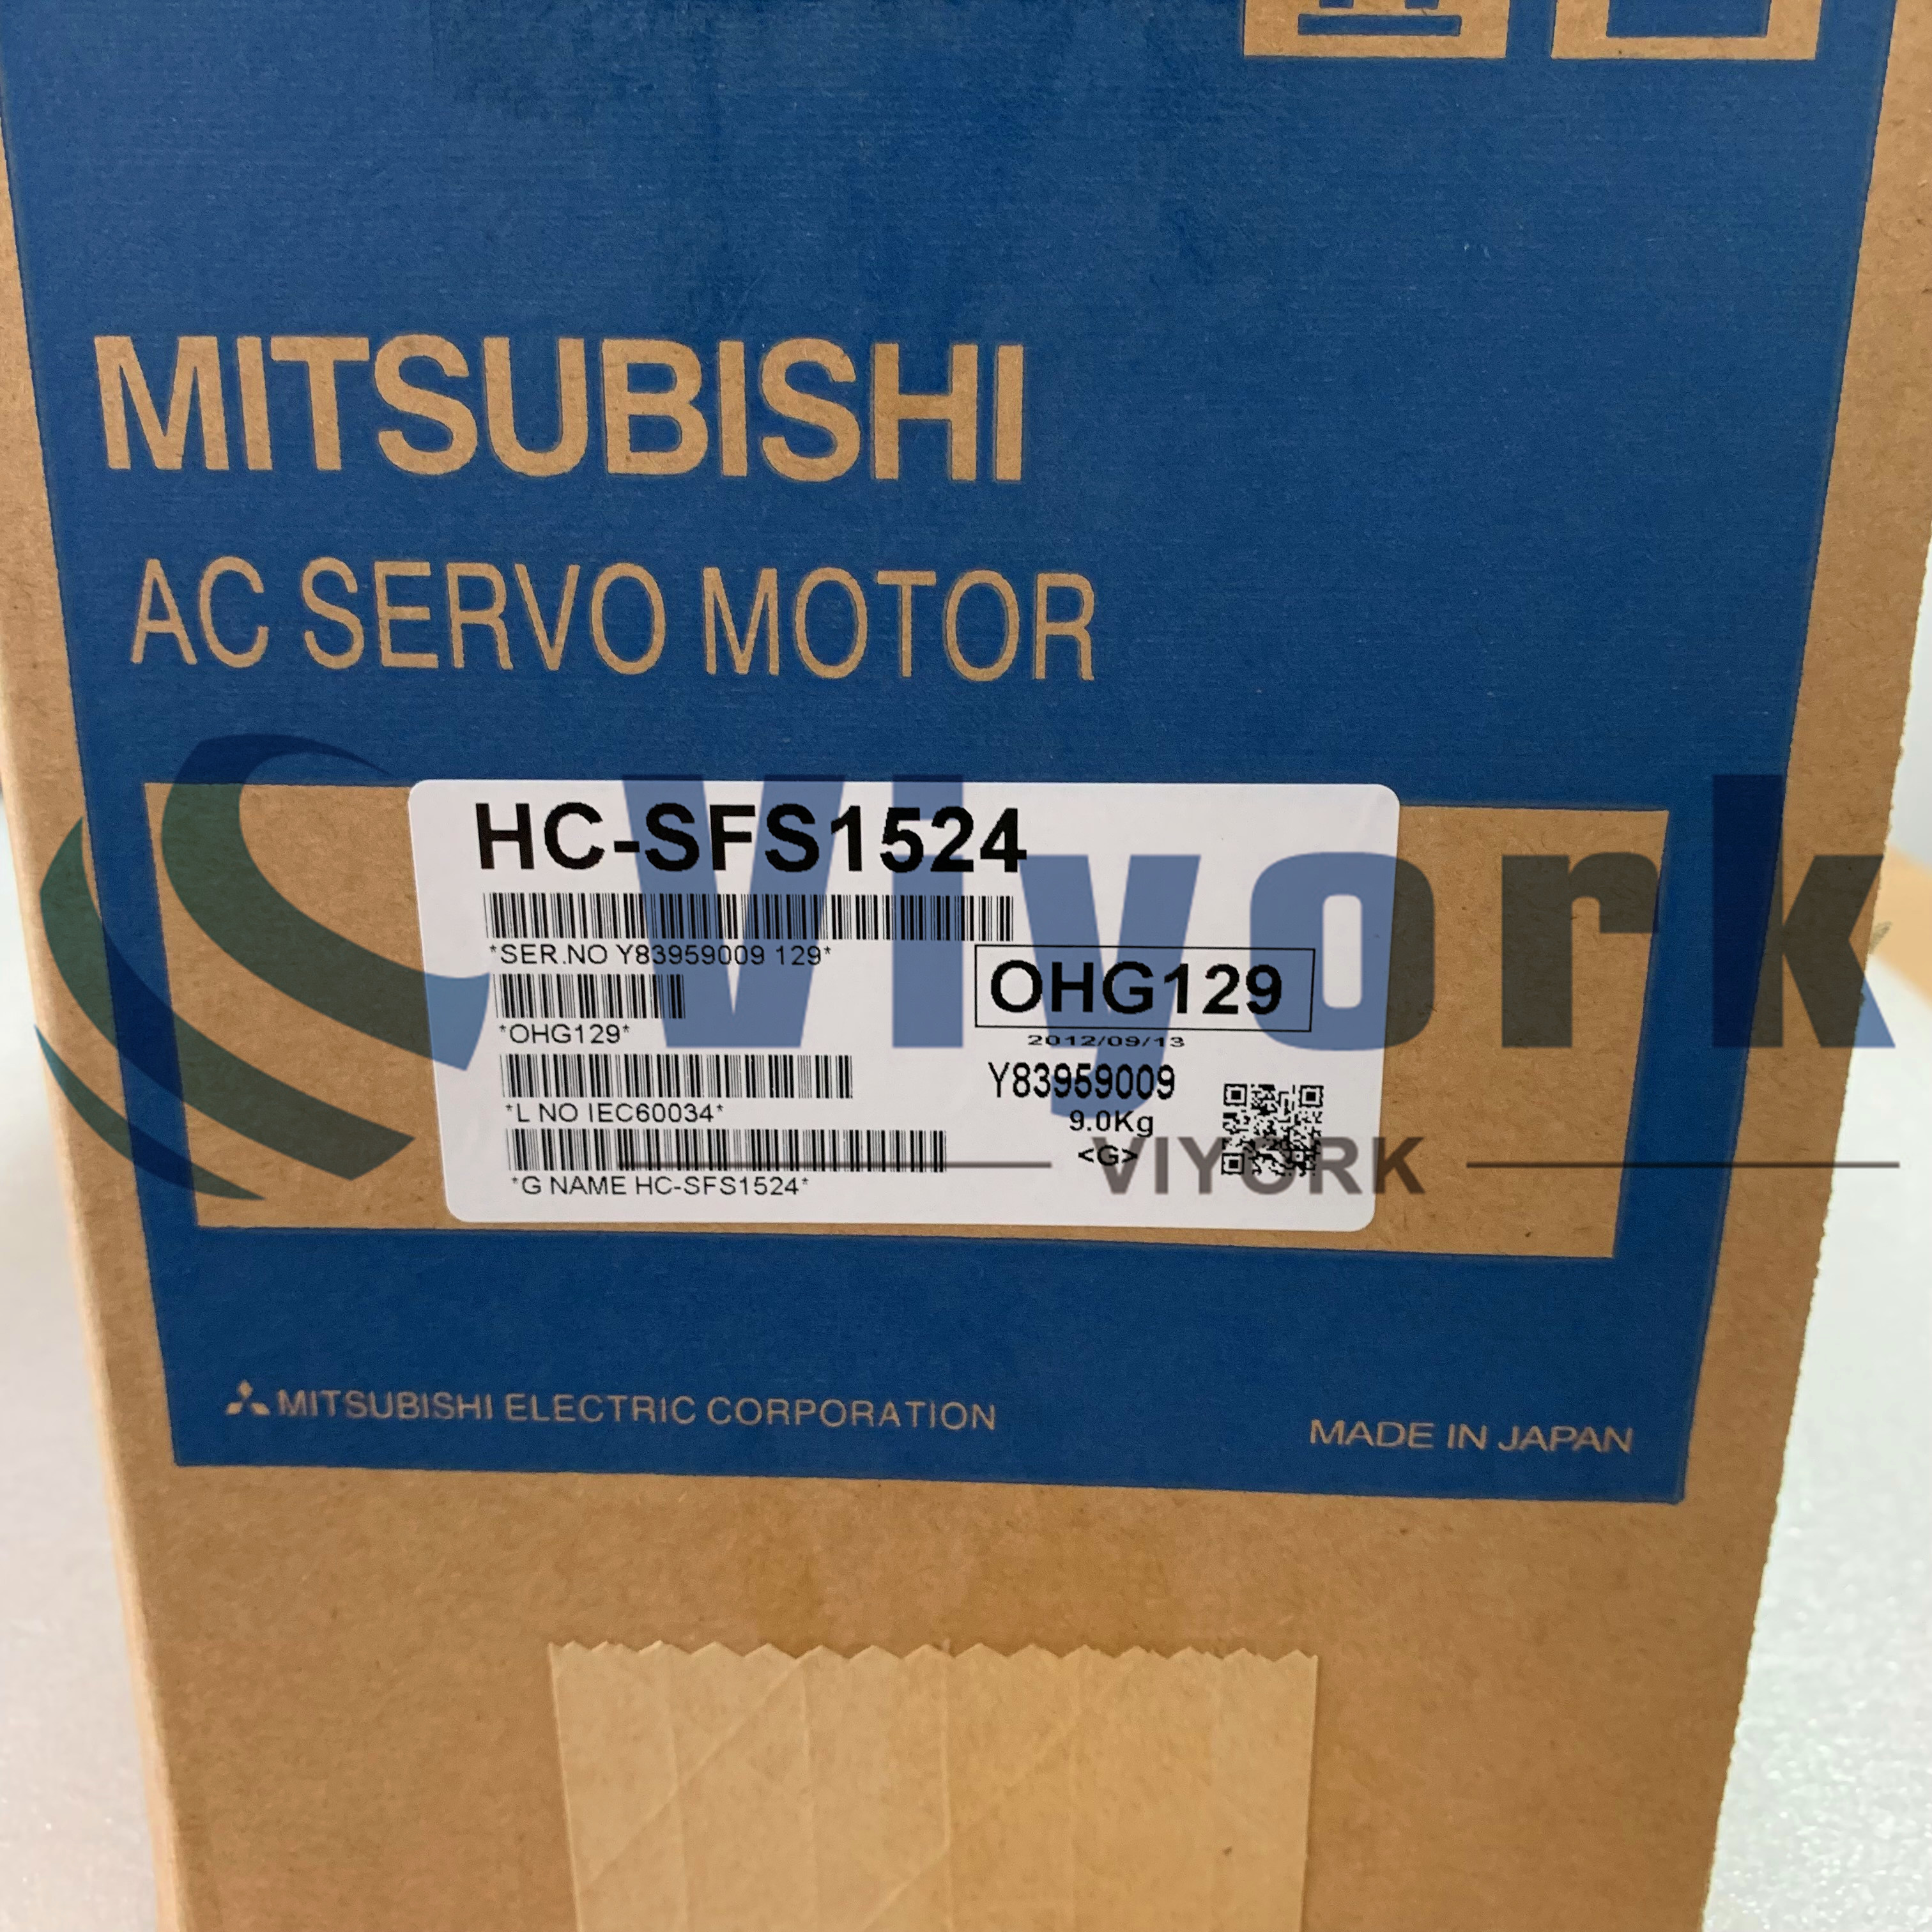 Mitsubishi HC-SFS1524 AC SERVO MOTOR 400V SRVMTR 1.5KW 2000RPM NEW